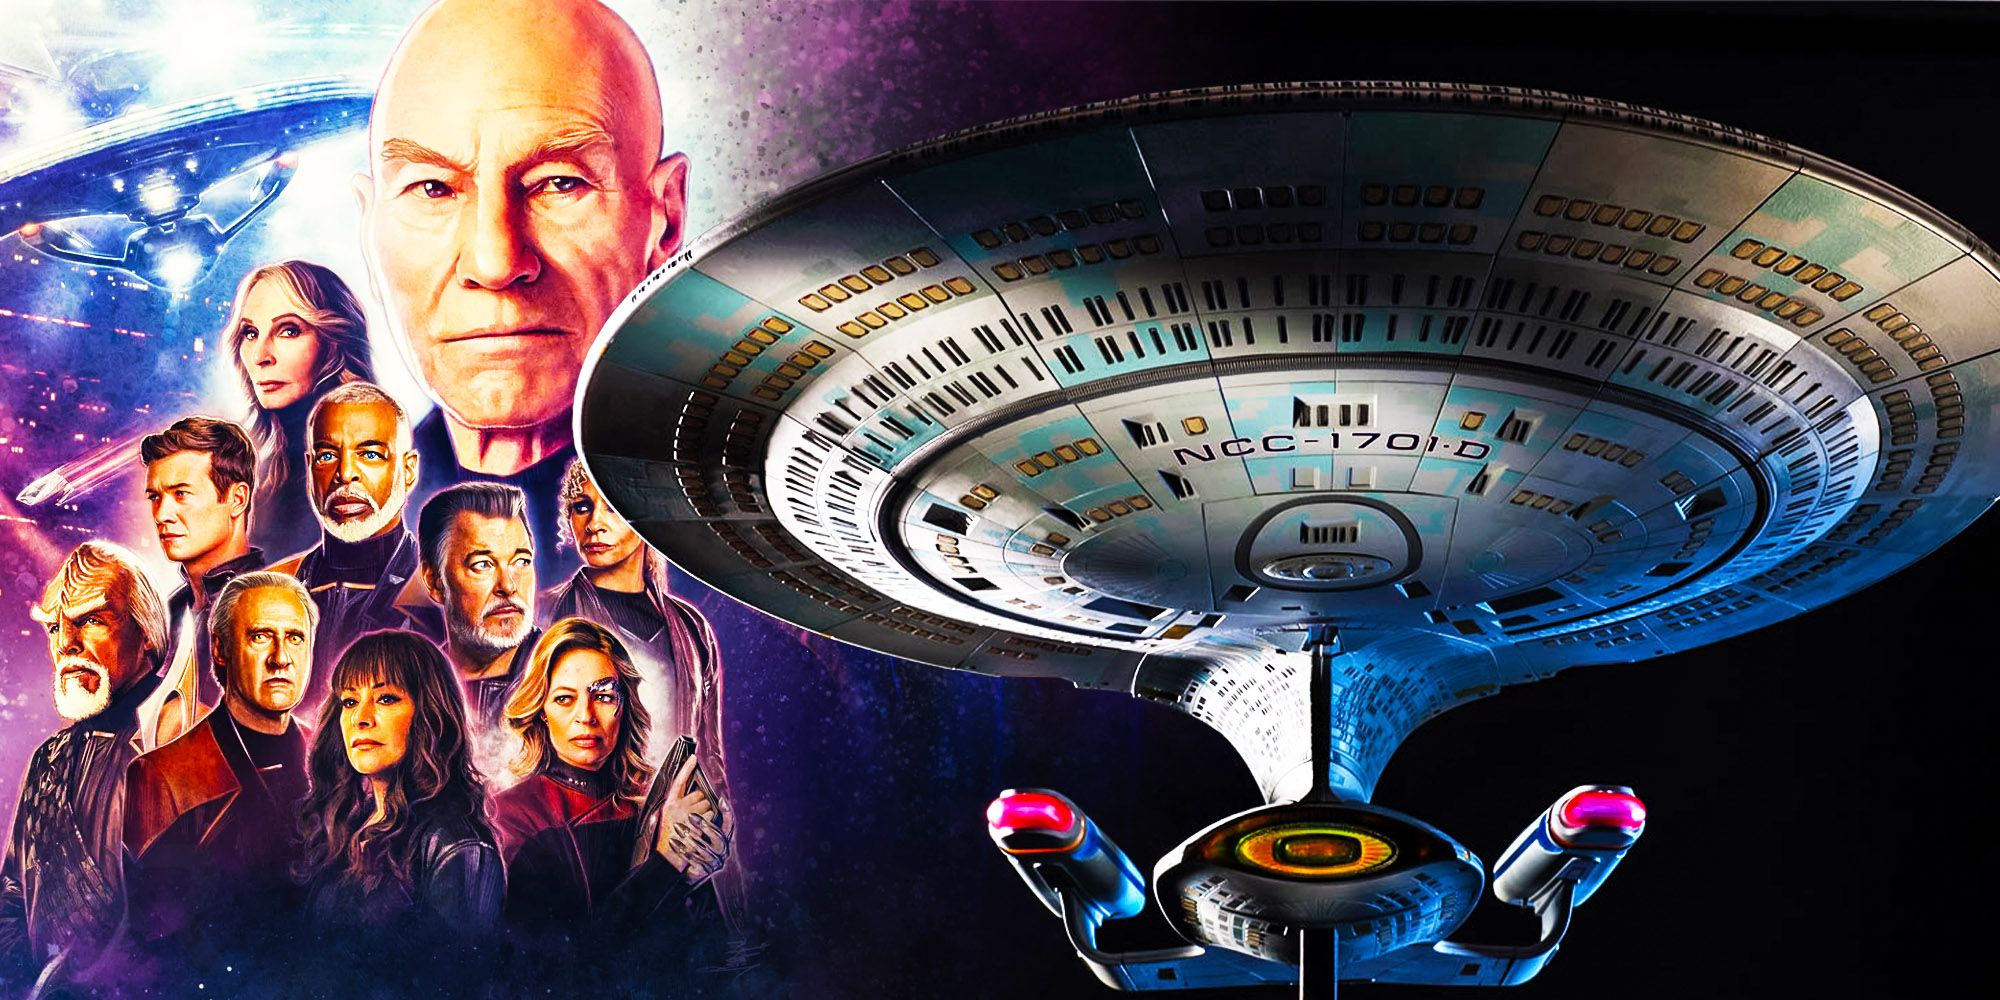 Picard recrear Enterprise-D de TNG tomó 4 meses, dice Showrunner